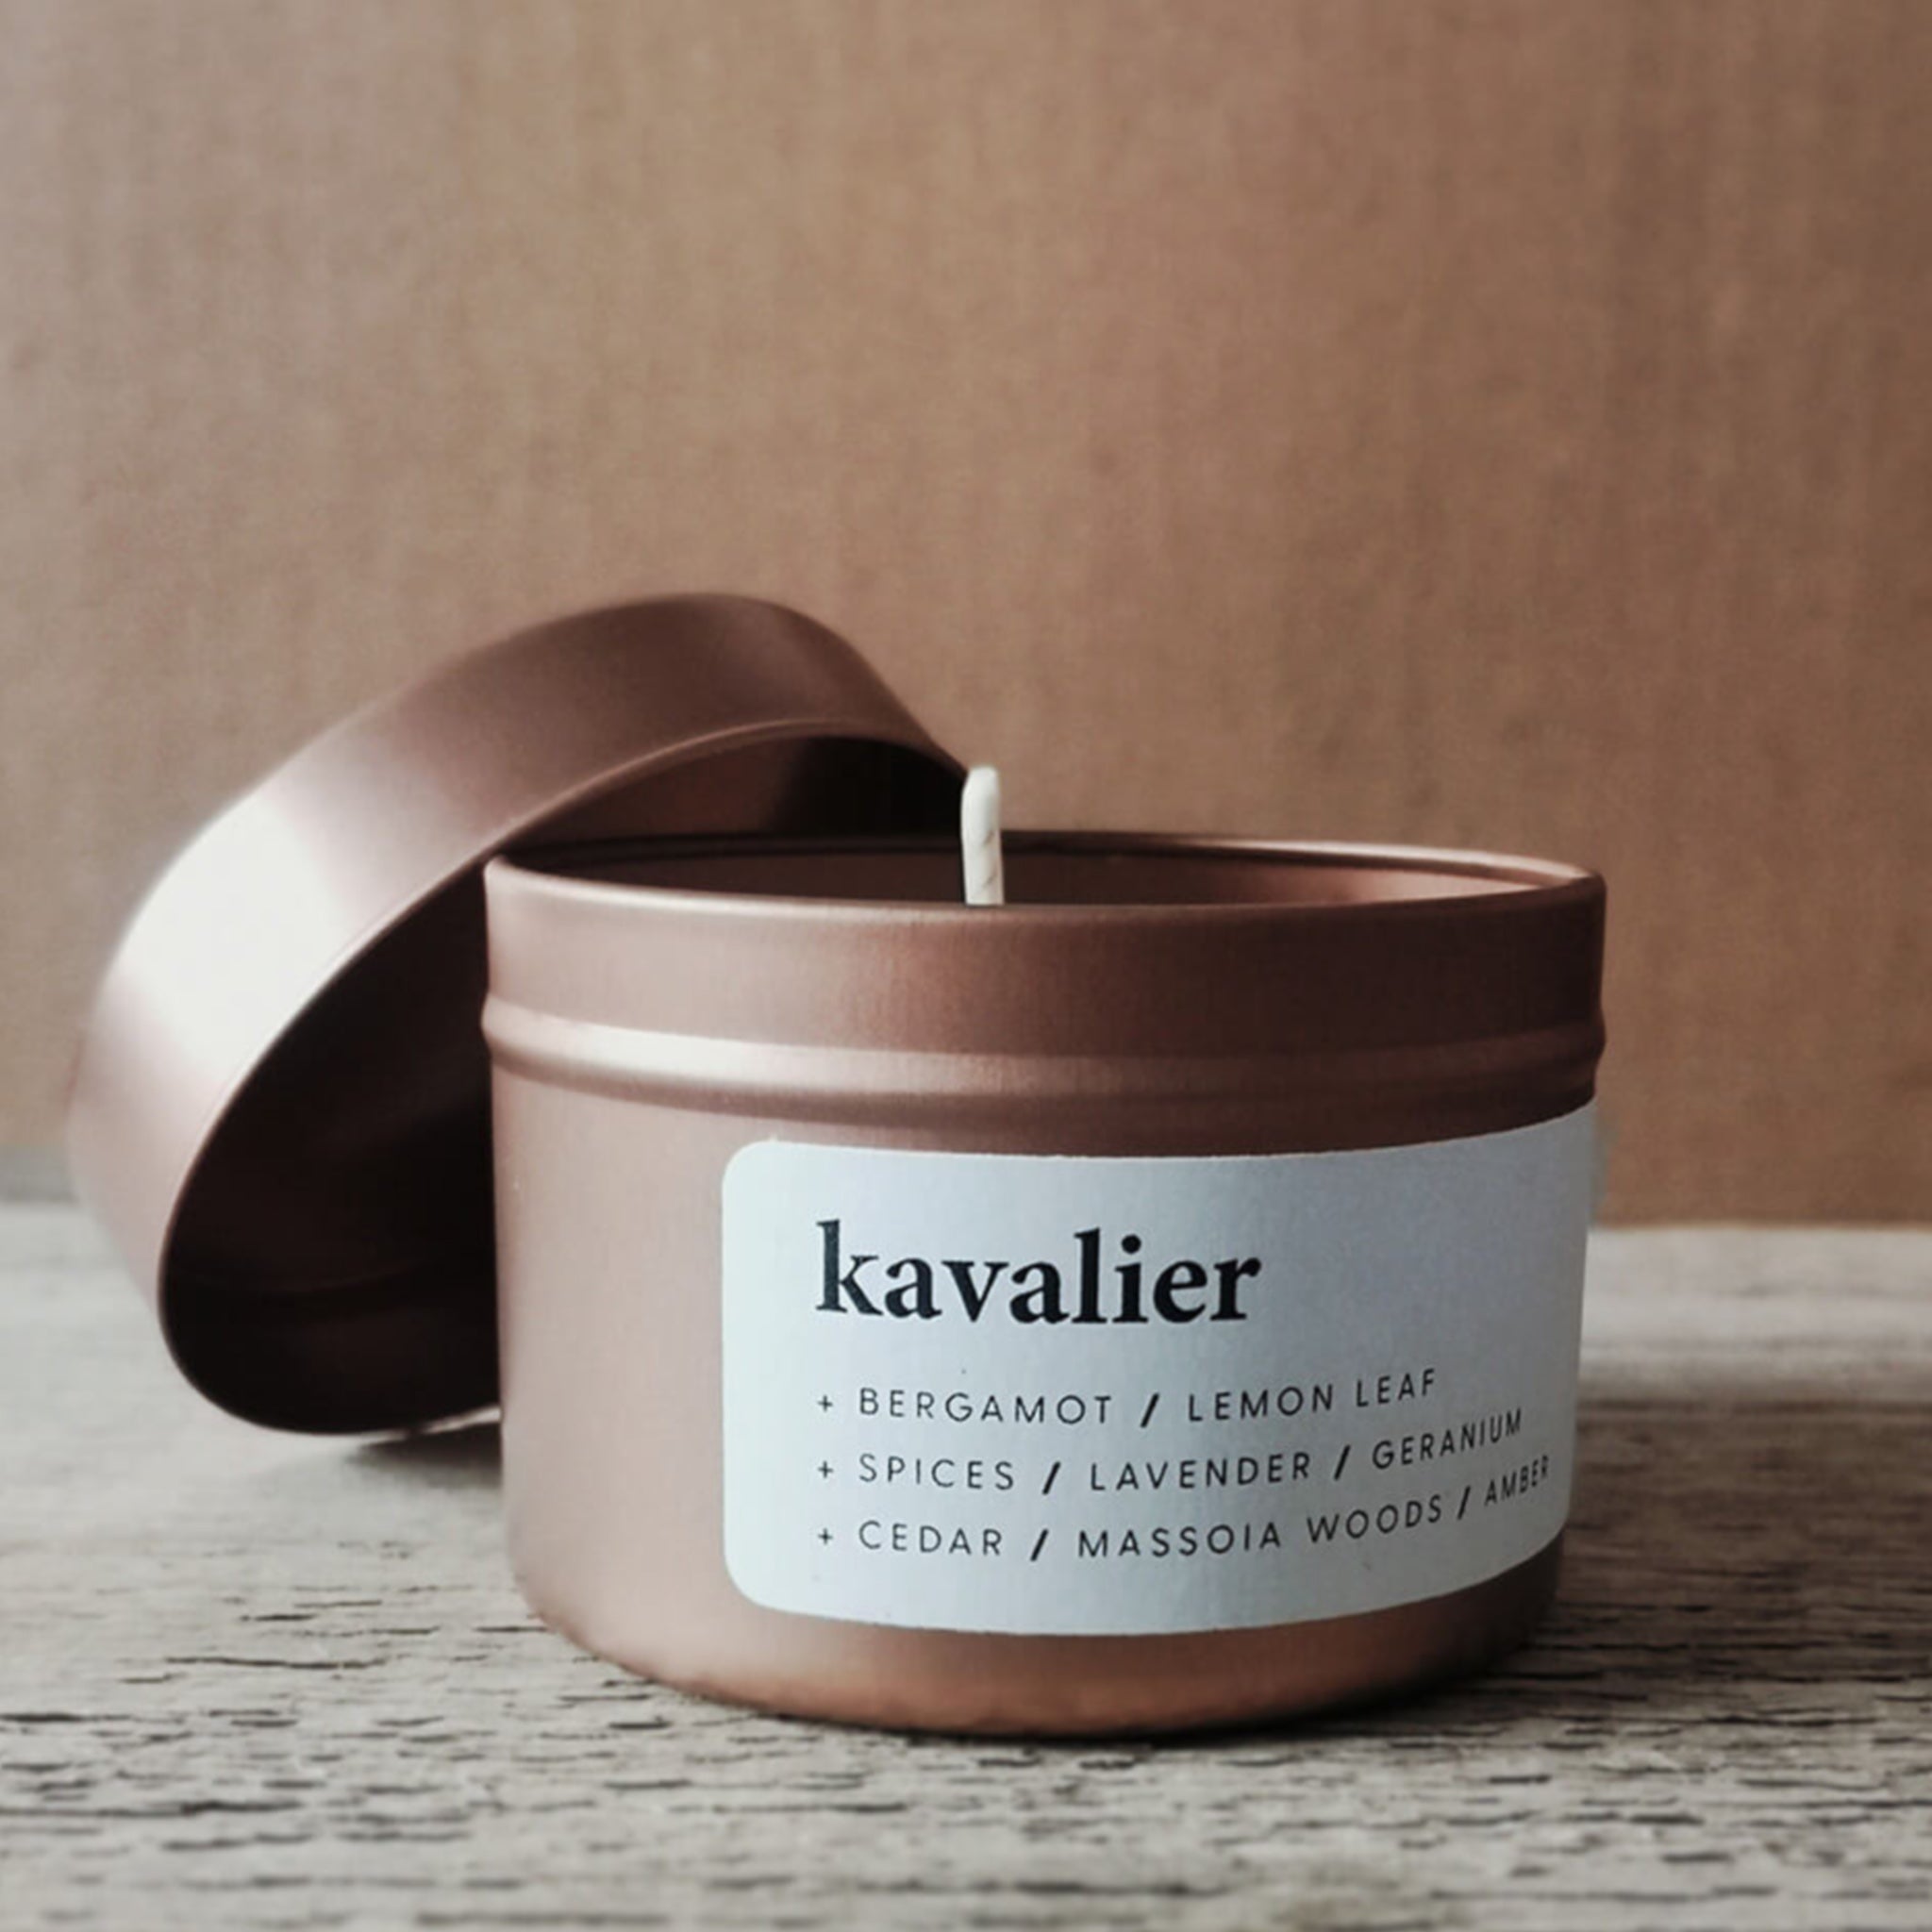 Keynvor Travel Tin Candle - Kavalier